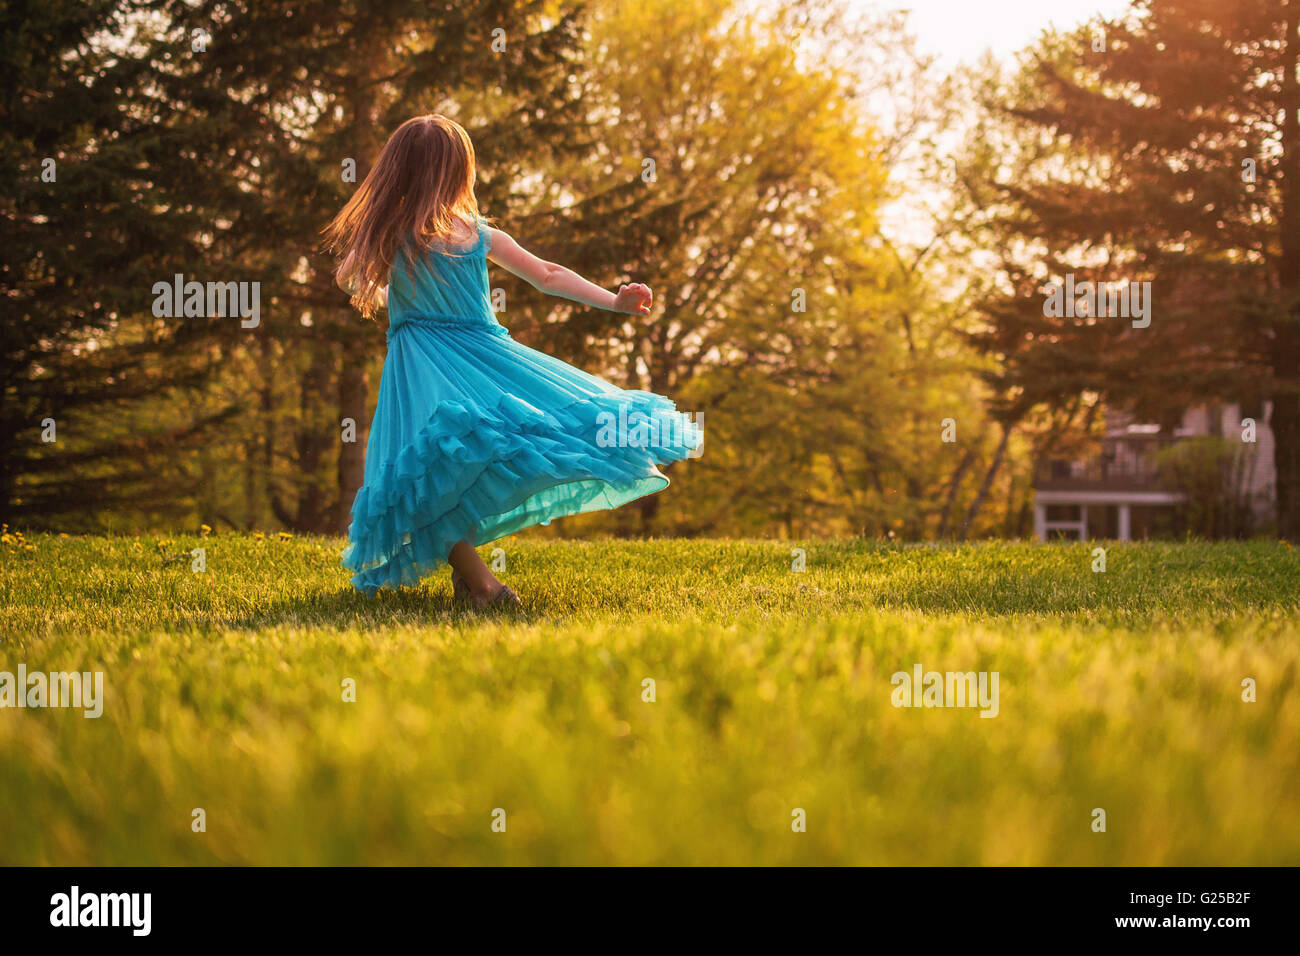 Girl in garden spinning around in a dress Stock Photo